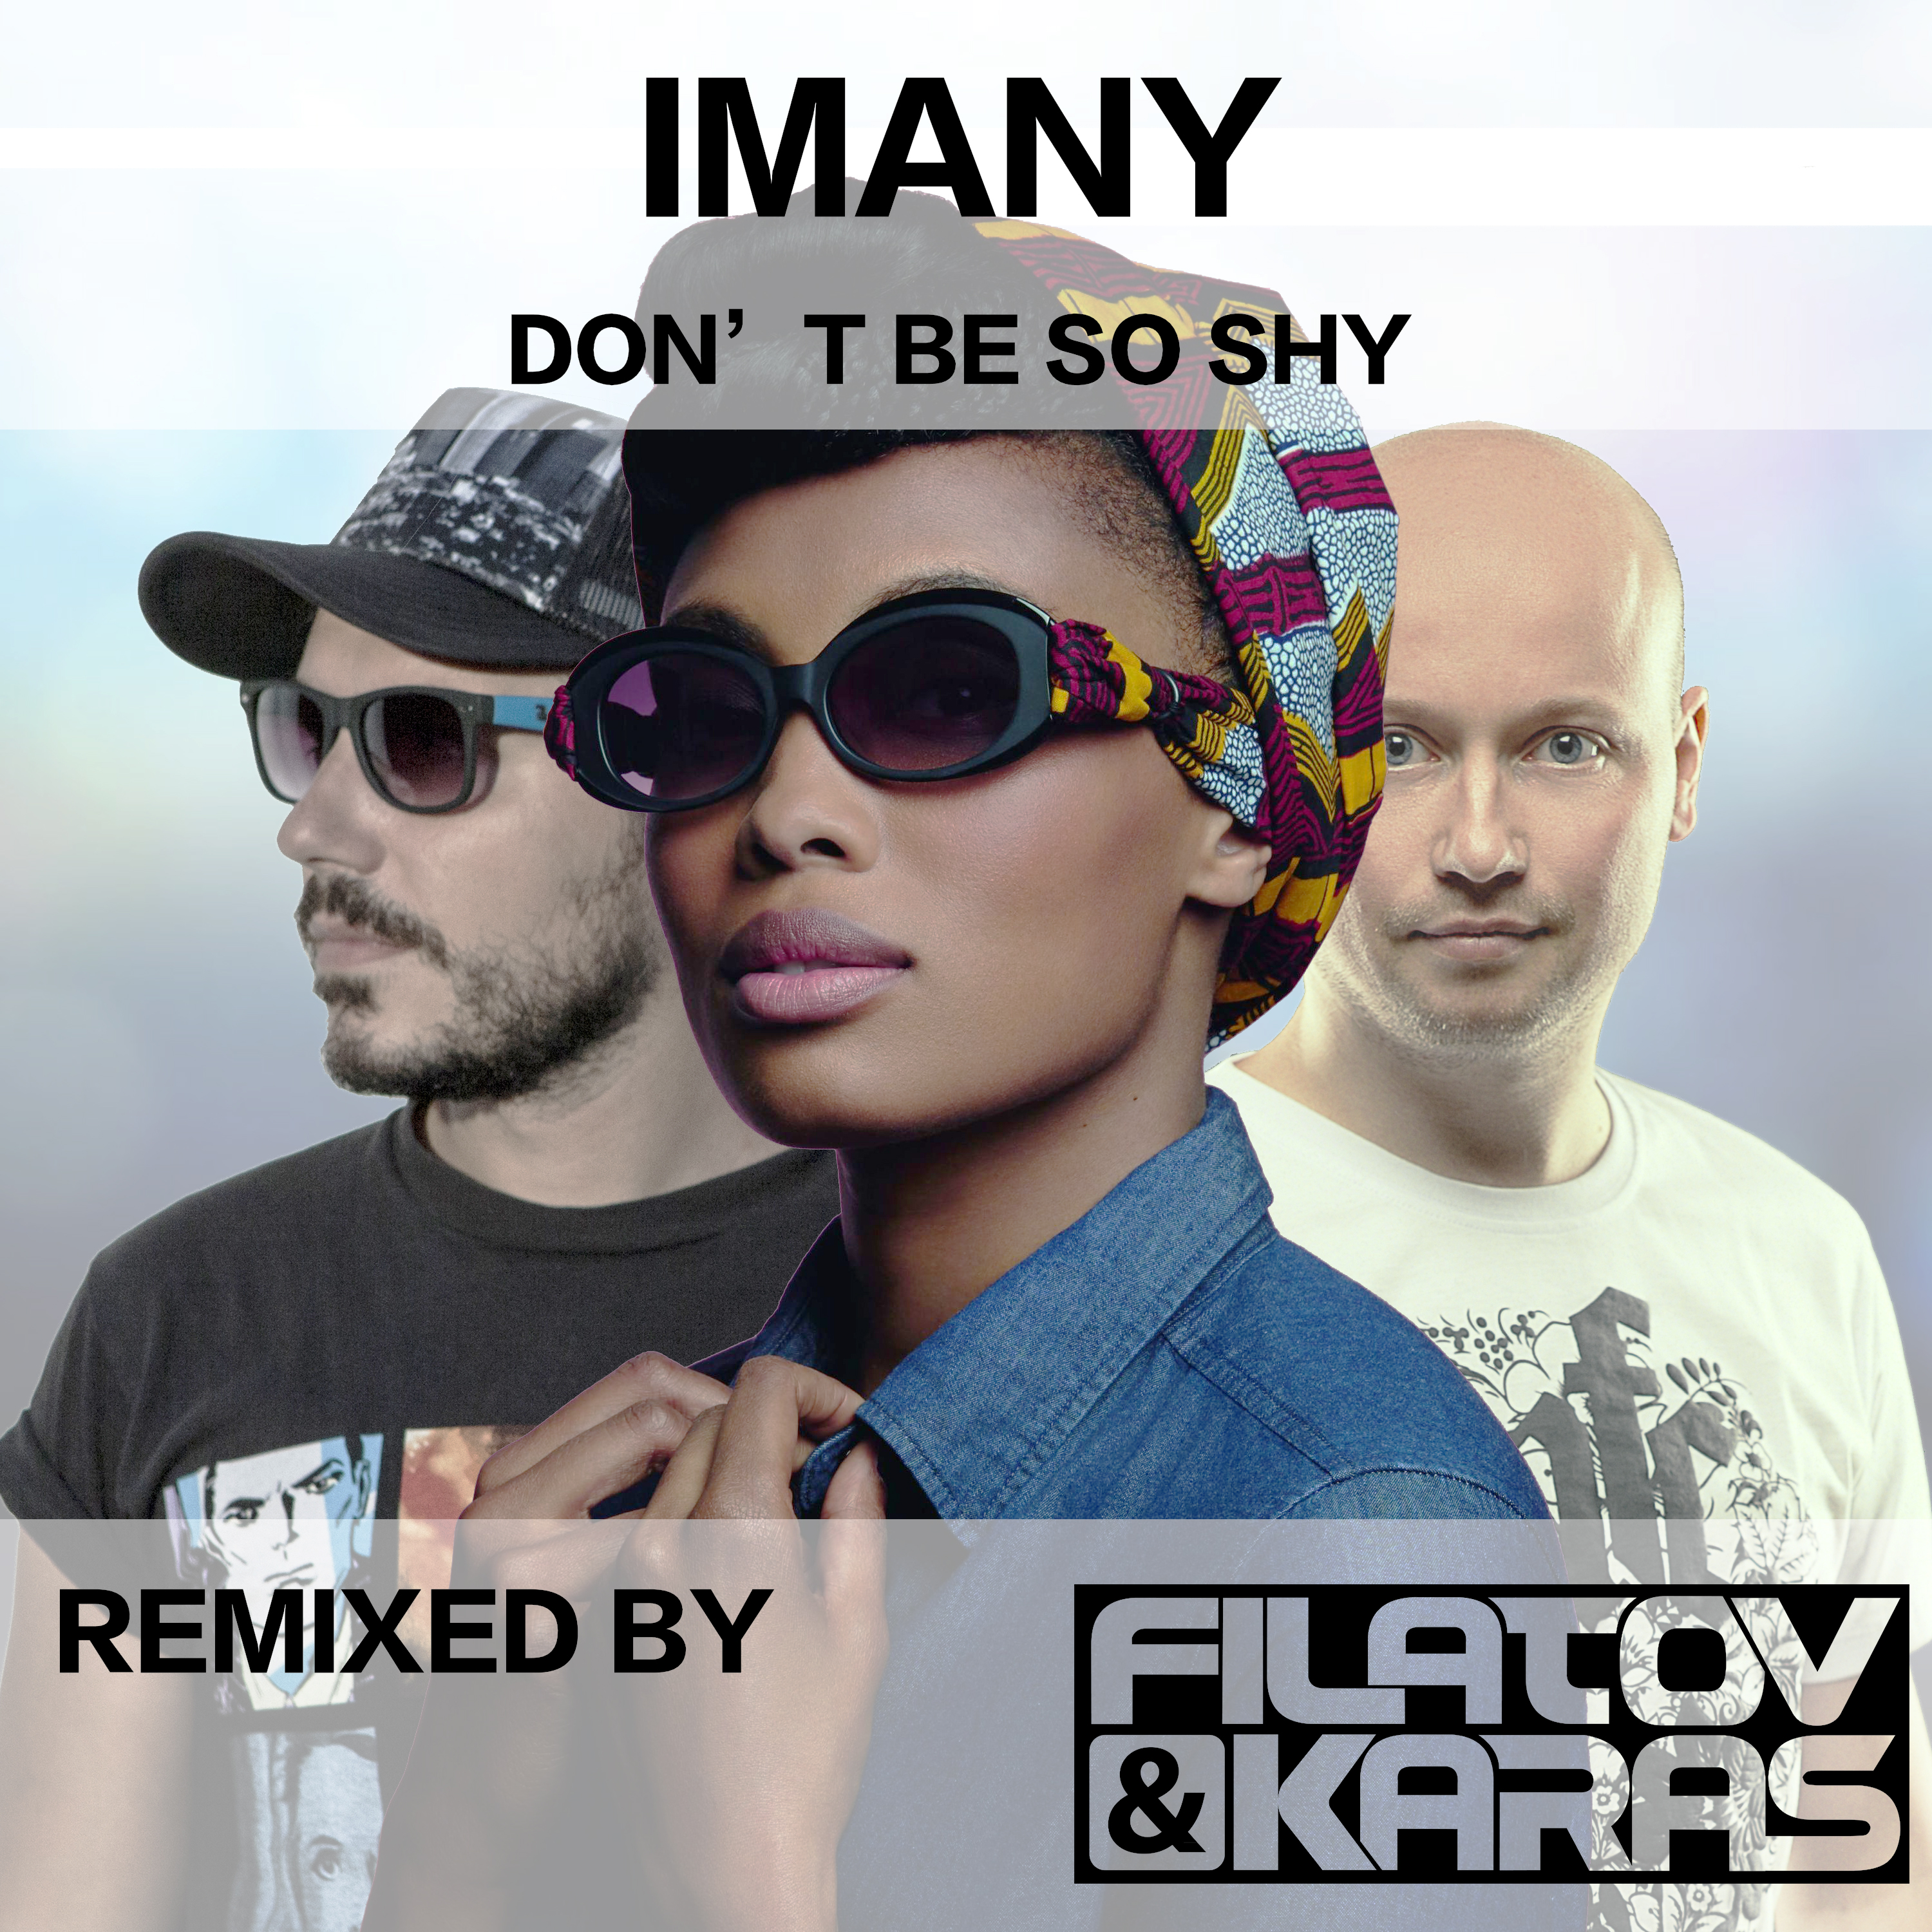 डाउनलोड करा Imany feat. Filatov & Karas - Don't Be So Shy (Radio mix)